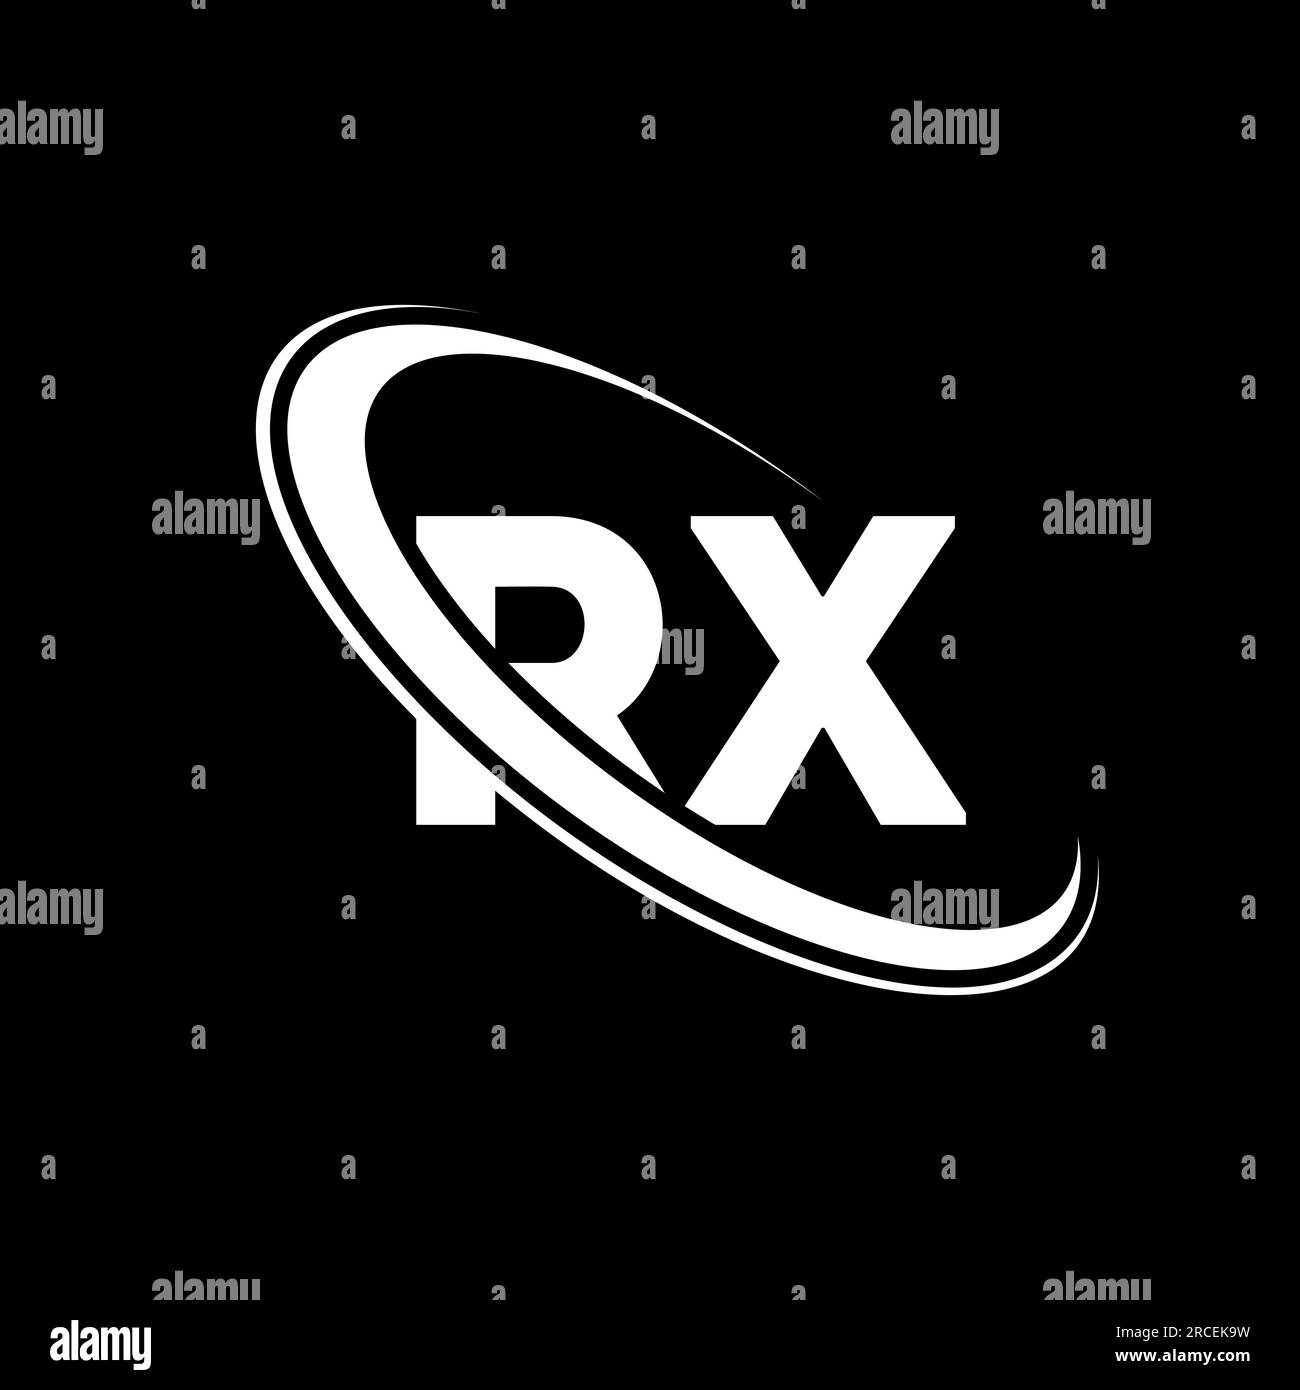 Premium Vector  Rx letter logo design with a circle shape rx